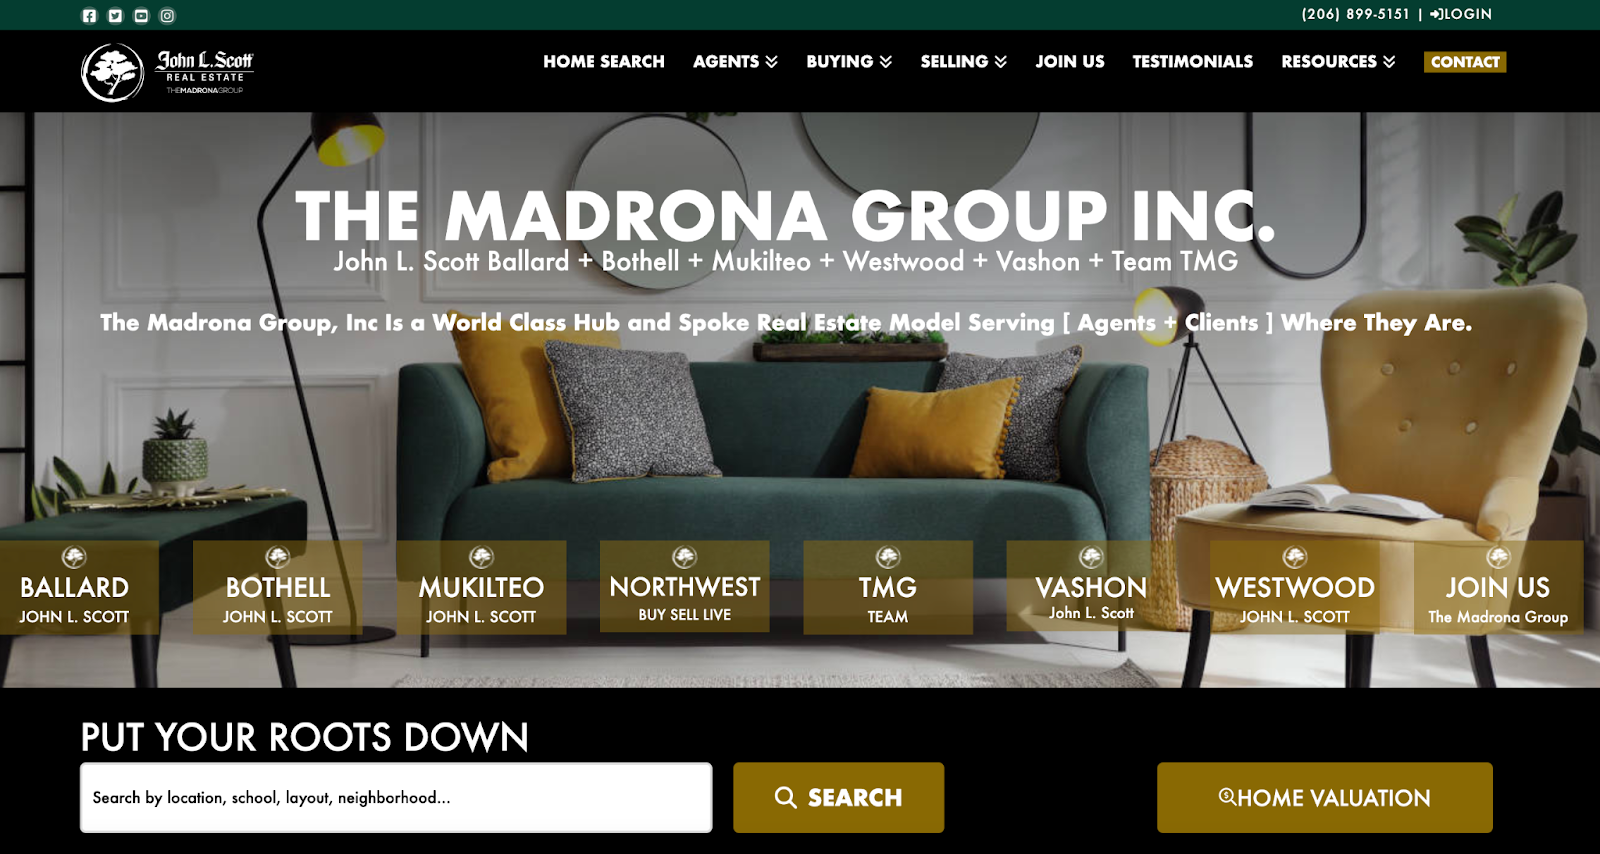 X theme wordpress example, The Madrona Group